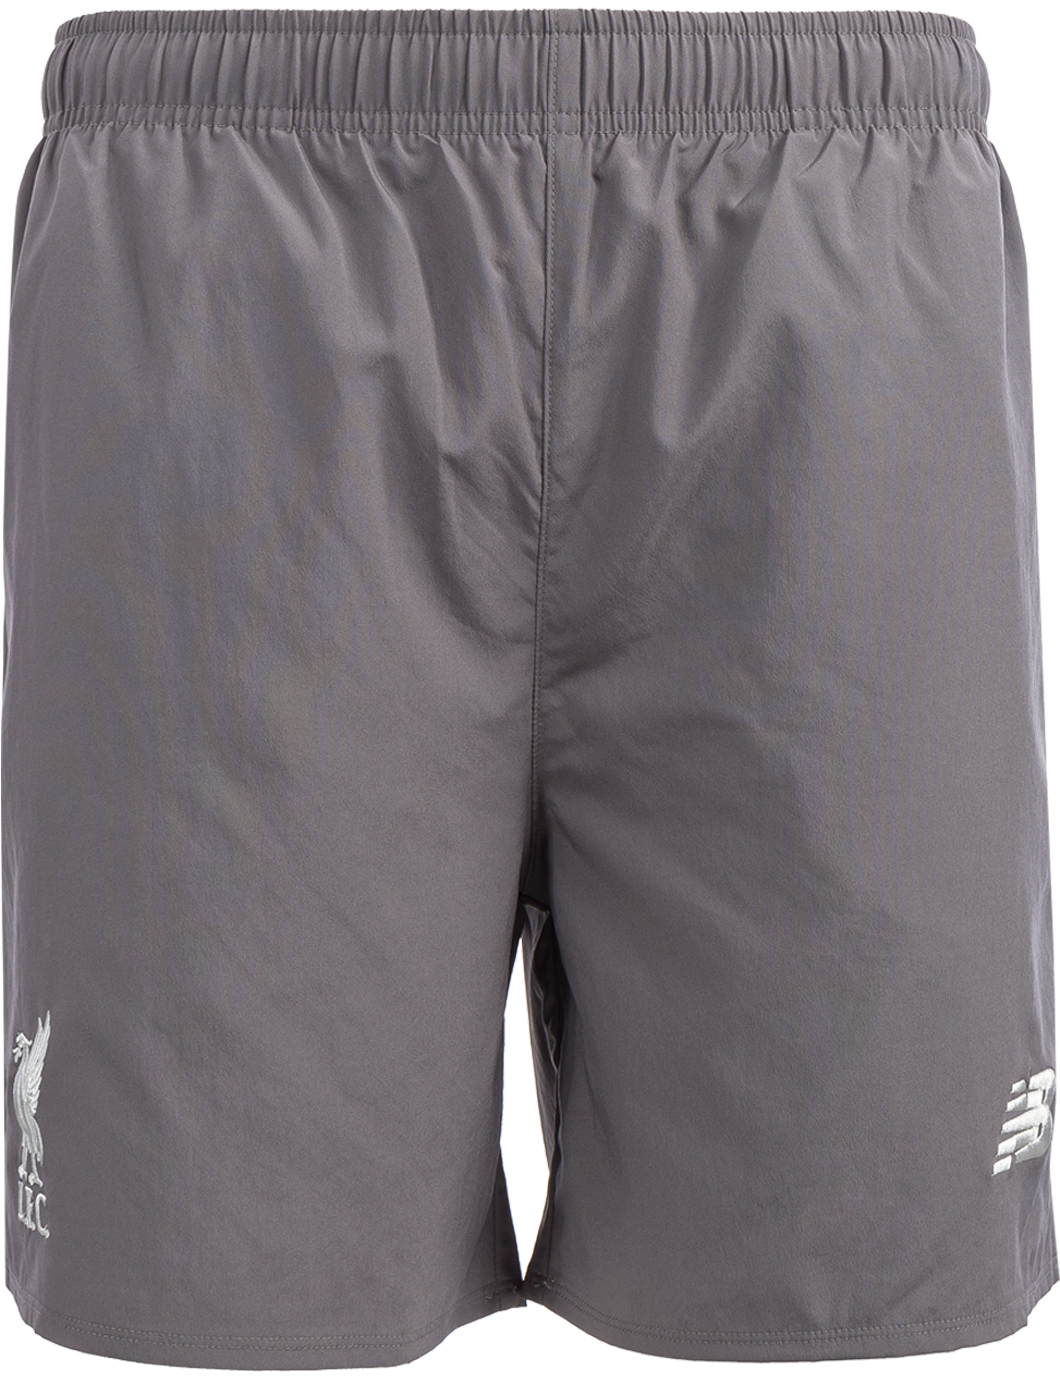 Liverpool Fc Elite Training Shorts With Pocket - Bermudas Da Adidas Feminino Clipart (1600x1600), Png Download